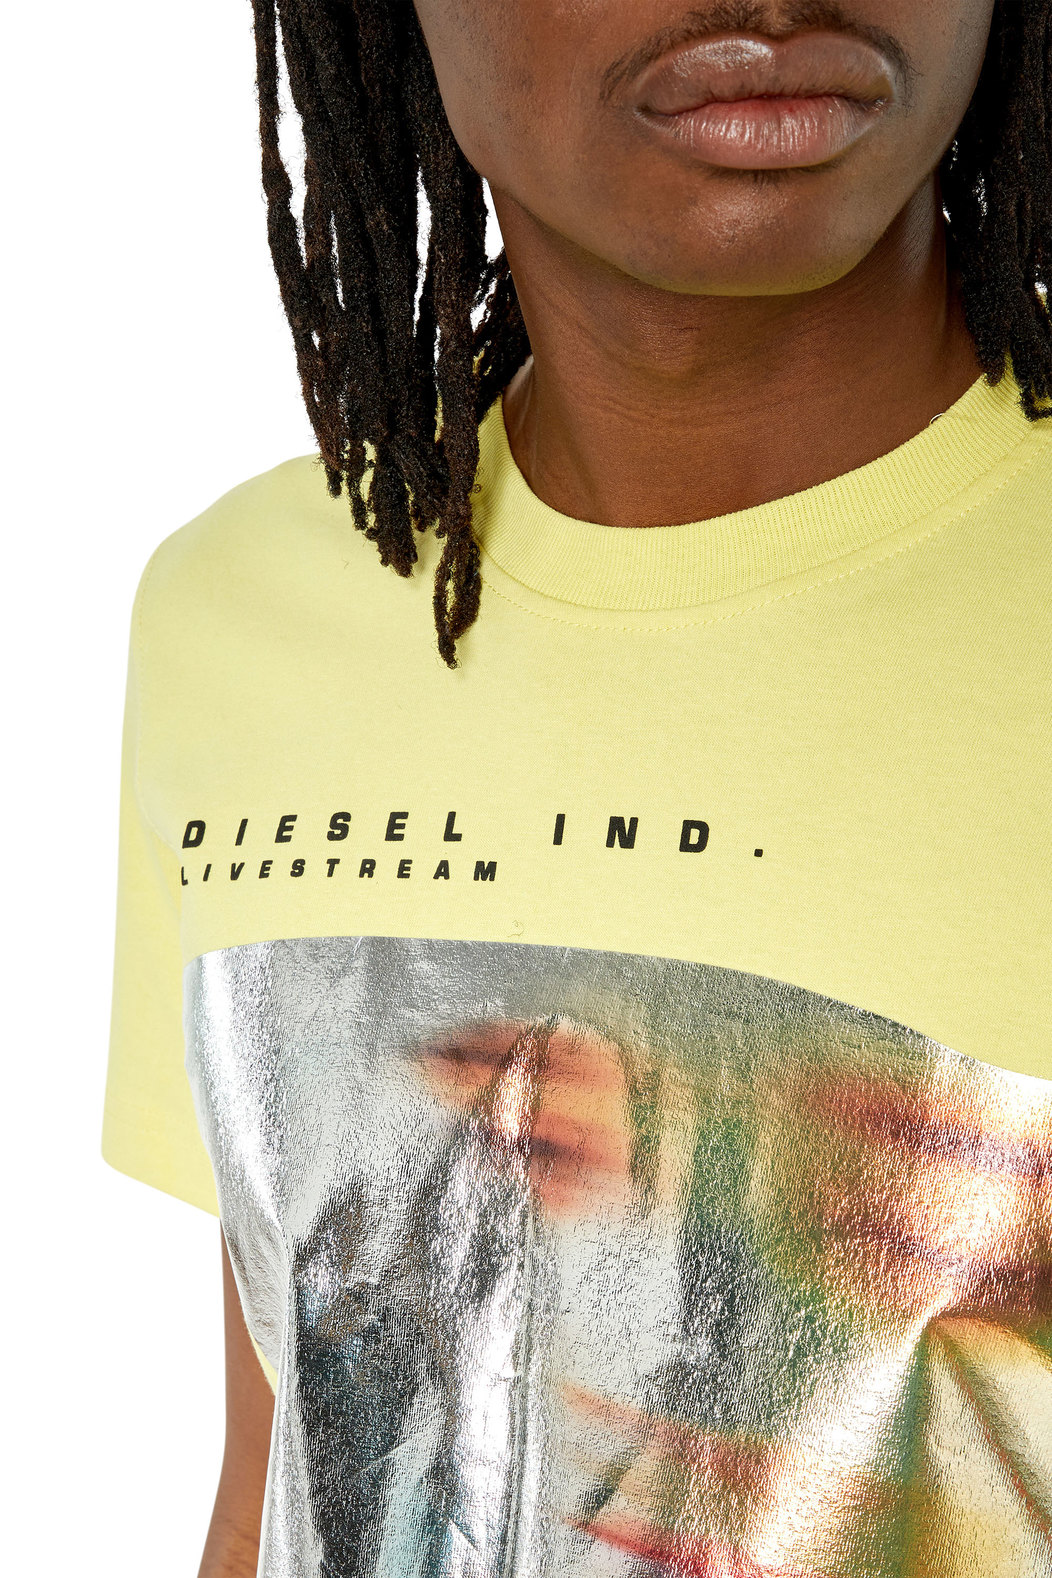 T-shirt with metallic blurry-face print